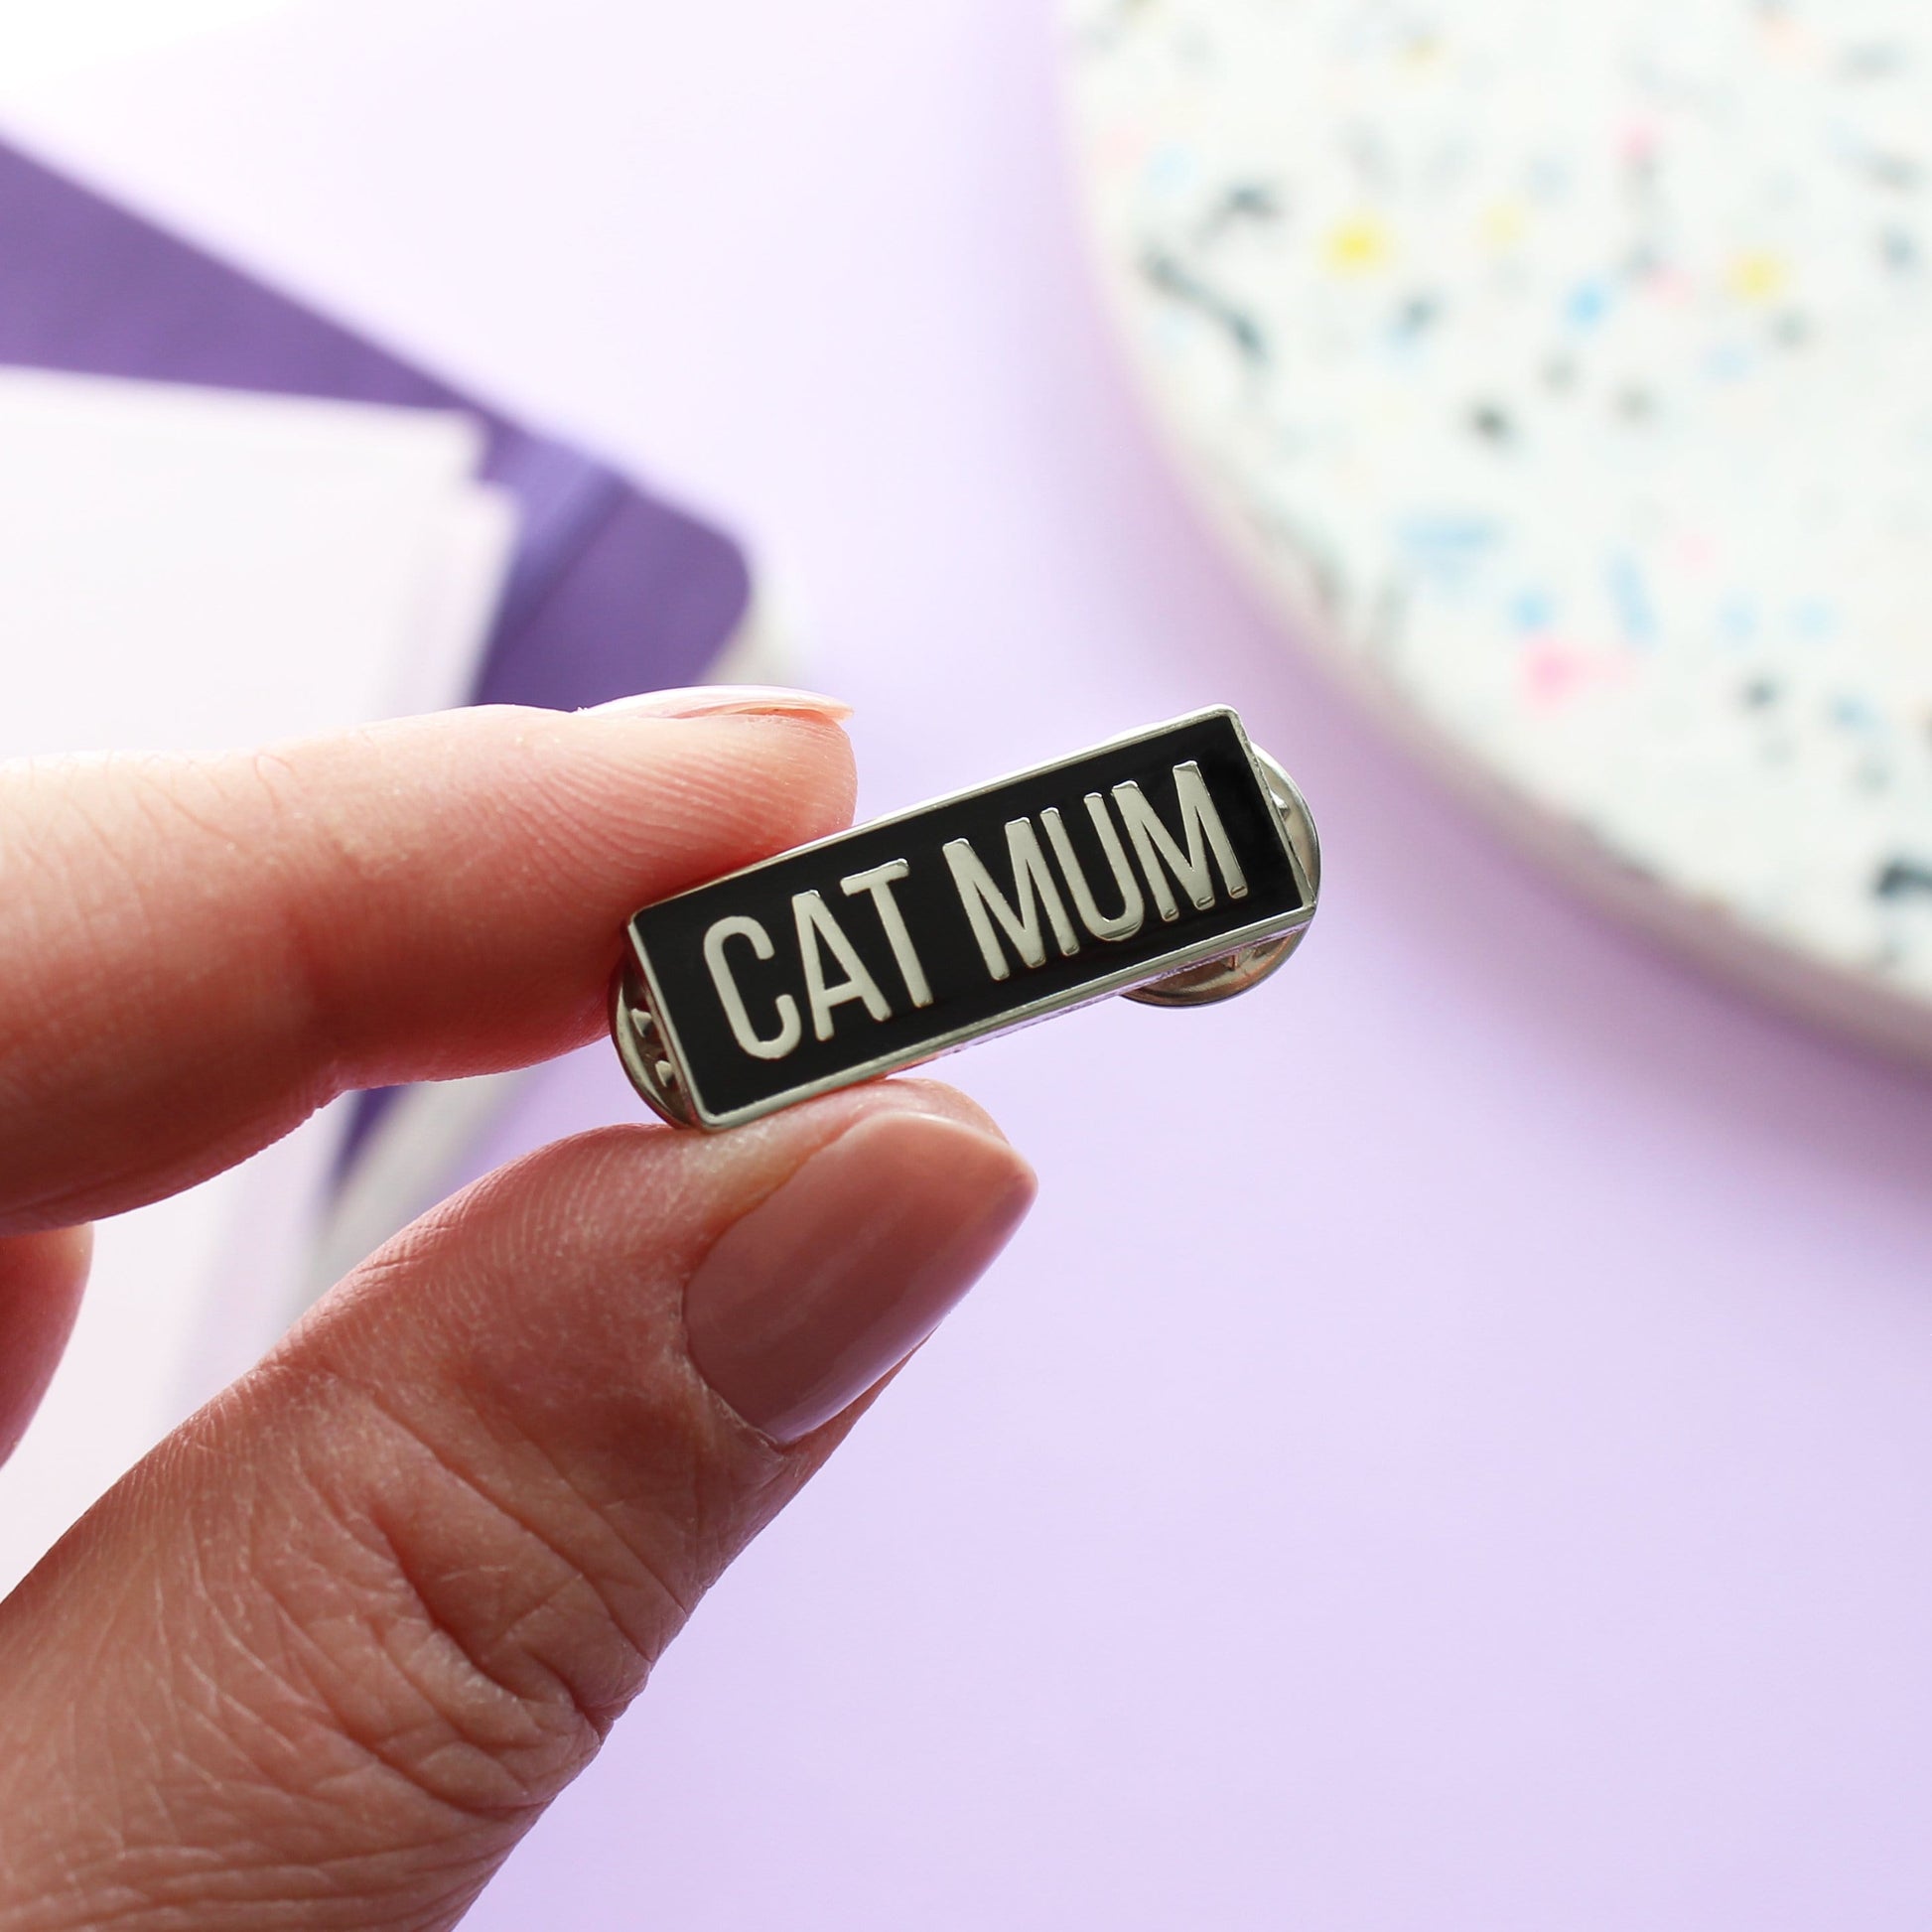 Cat mum enamel pin badge from Purple Tree Designs